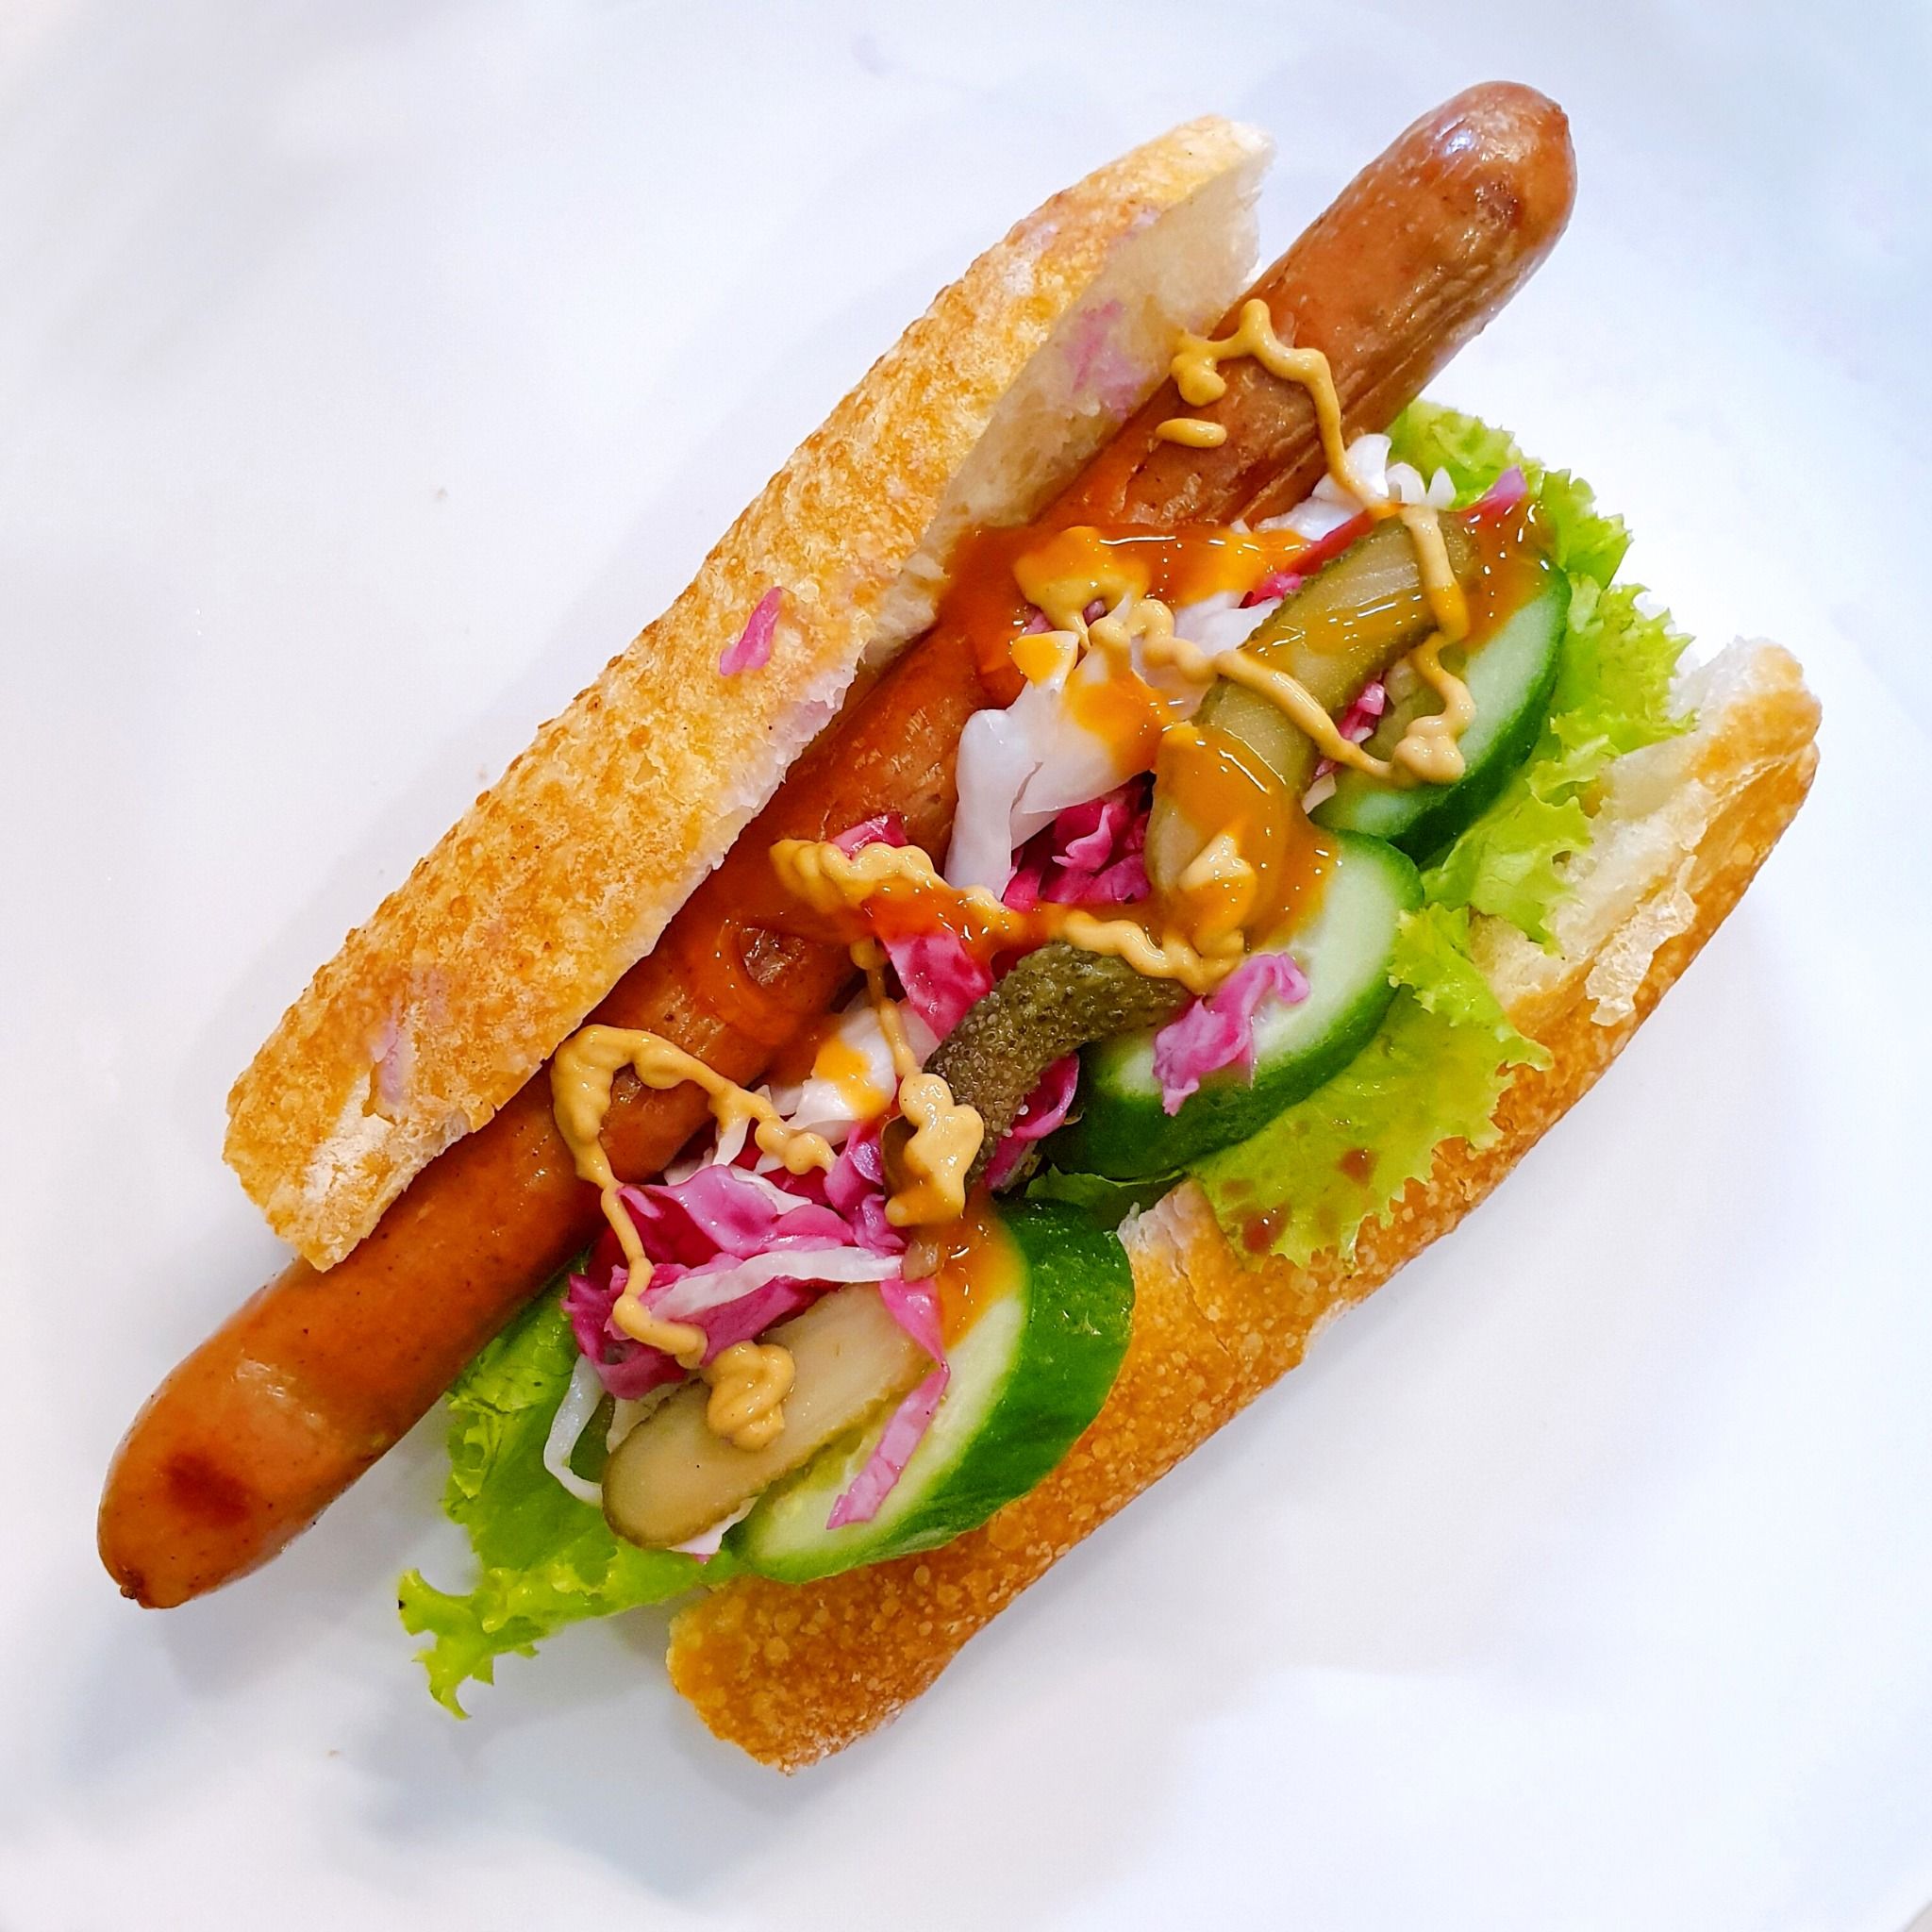  Hotdog (German sausage random kind, fresh veggies, pickles, mustard/chili sauce/ketchup) 